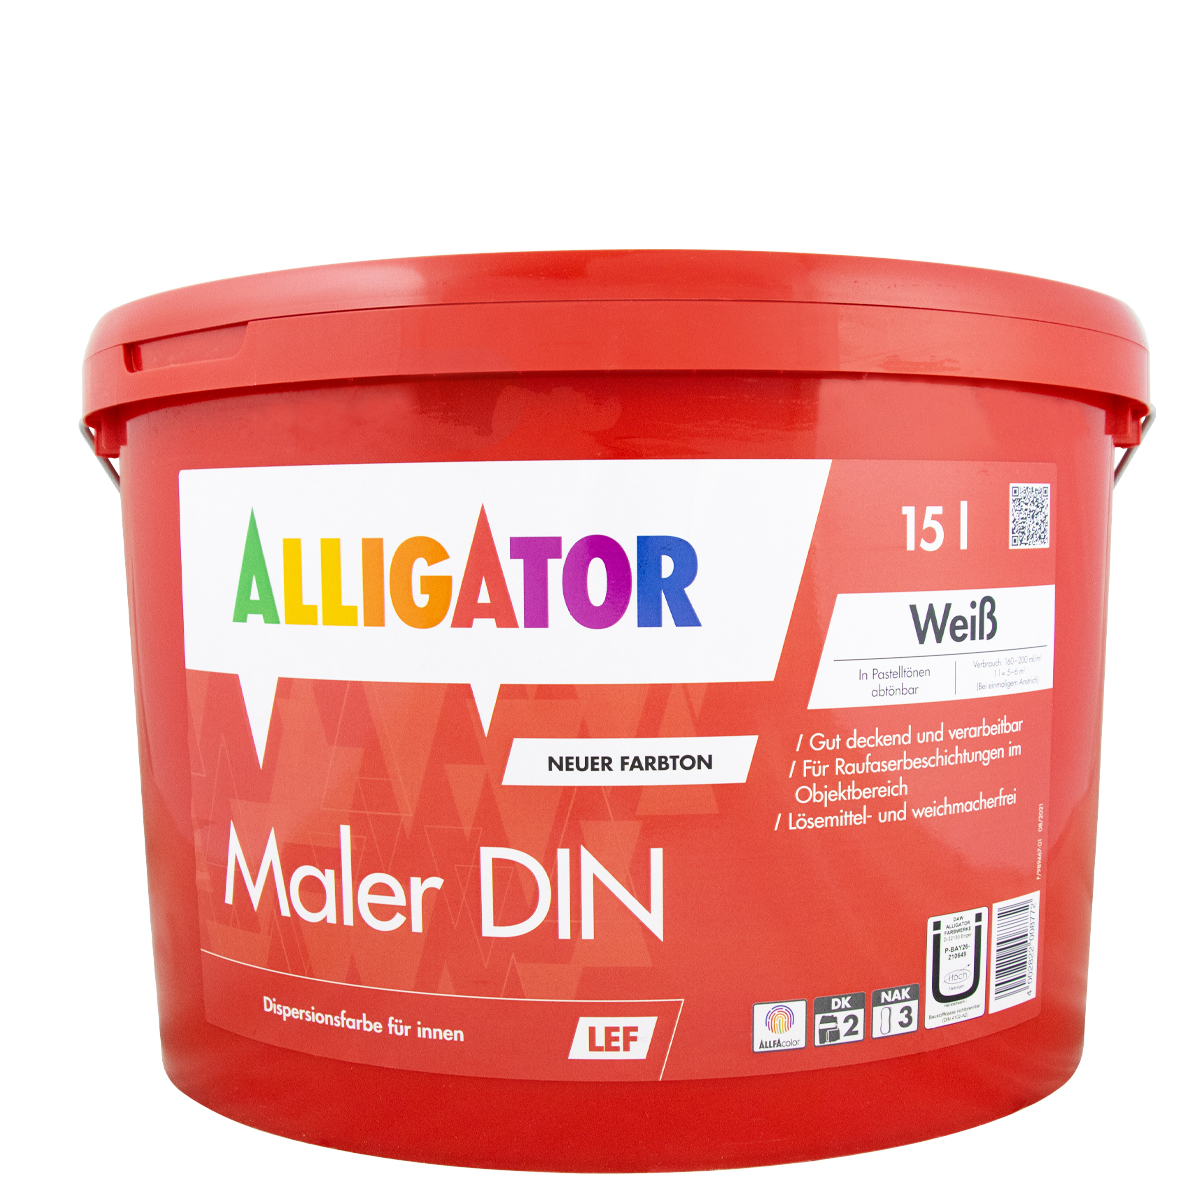 Alligator Maler DIN LEF 15L weiss, RAL 9016, sehr gut deckende Wandfarbe